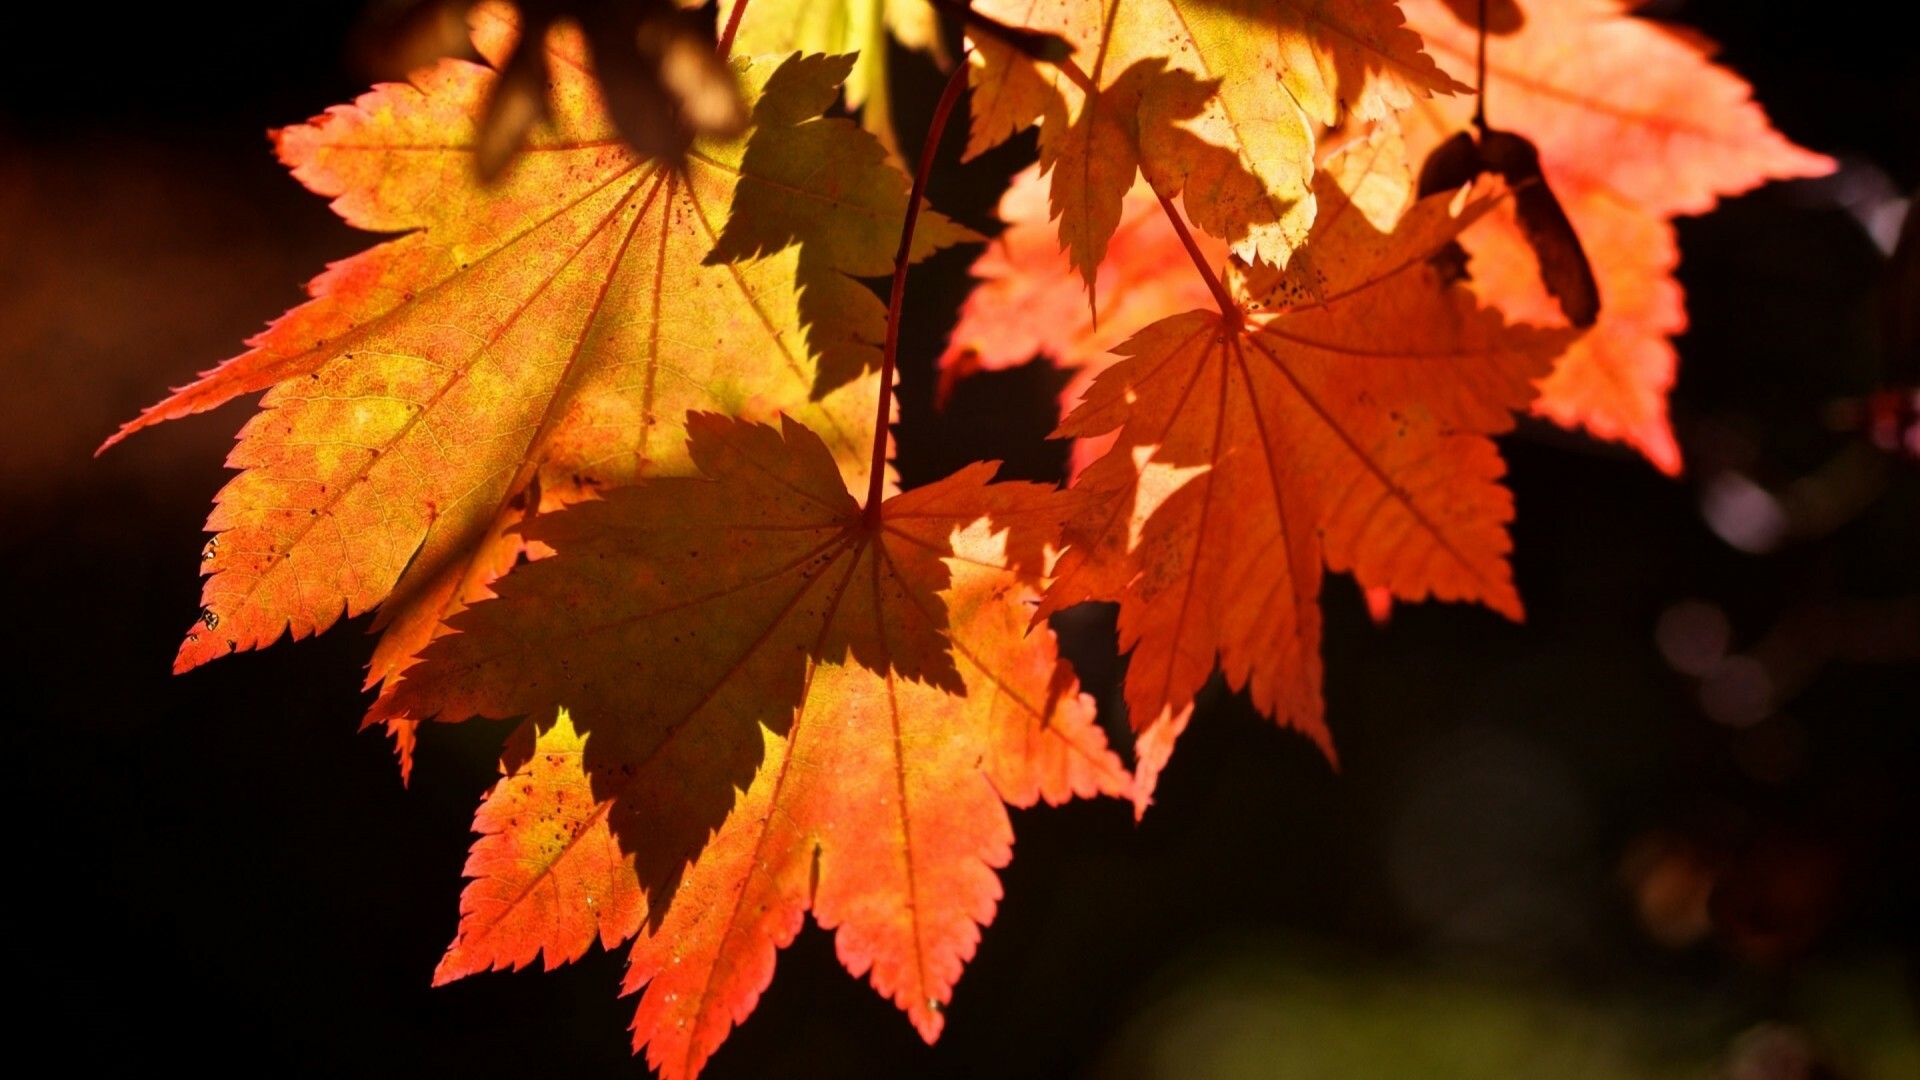 Leaves: Light shining through blurred autumn foliage, Seasonal changes in plants. 1920x1080 Full HD Wallpaper.